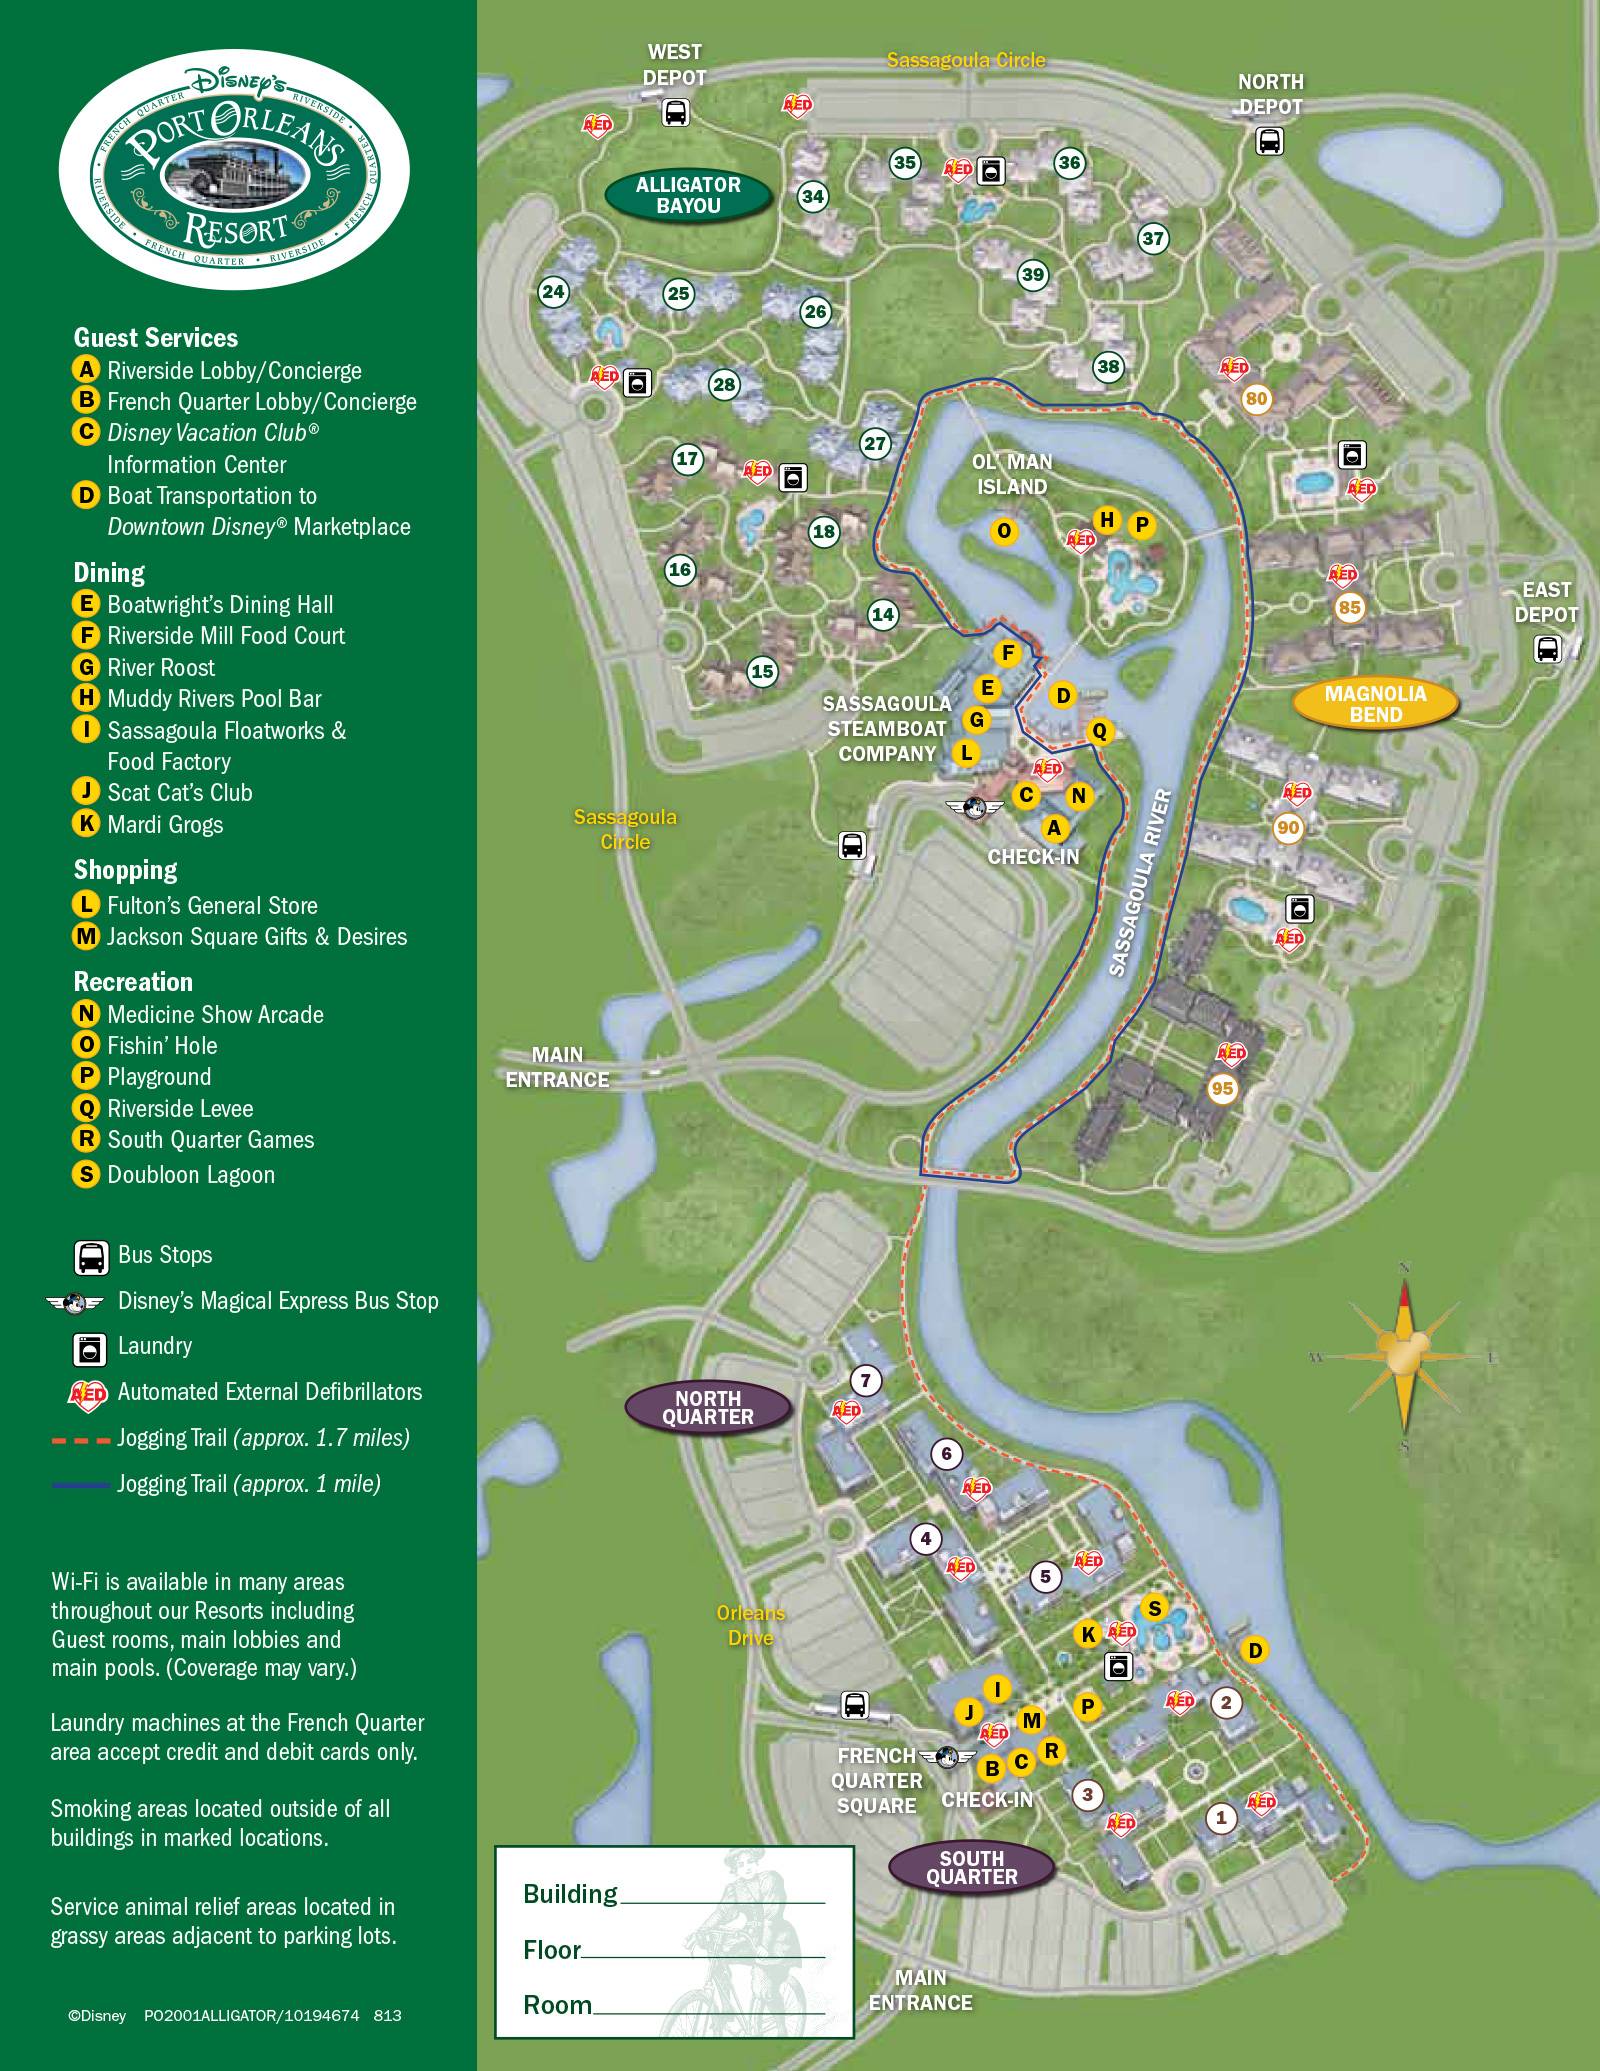 2013 Port Orleans Riverside guide map